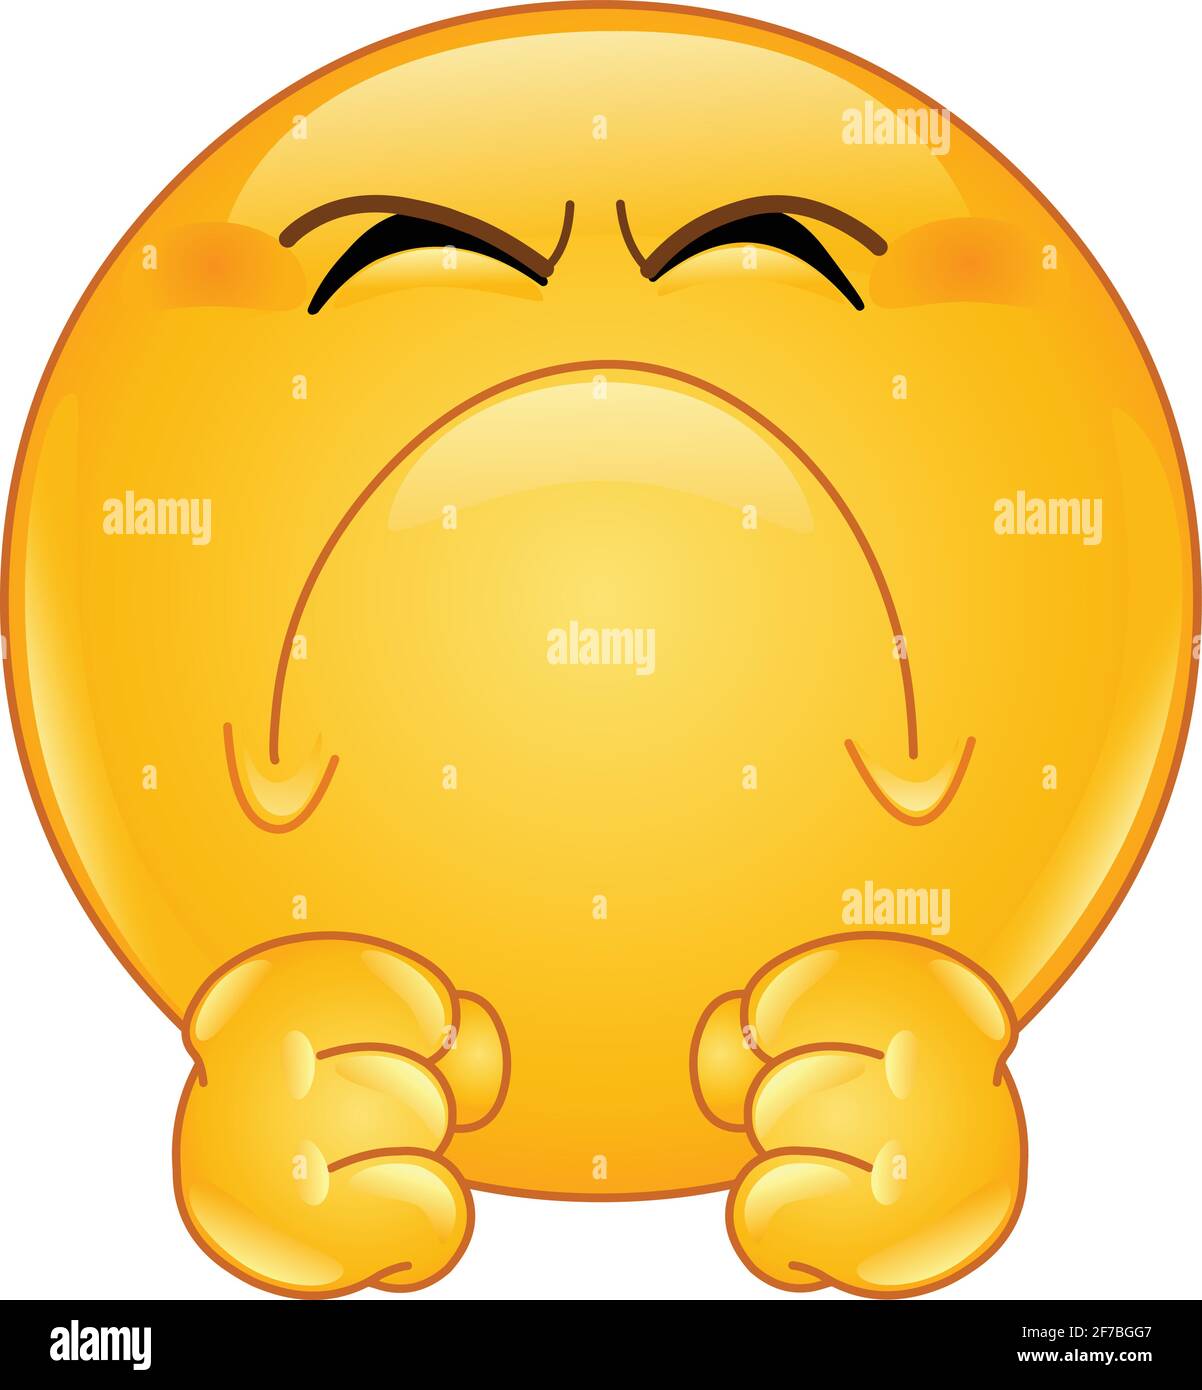 Gereizter wütender, verrückter Emoji-Emoticon Stock Vektor